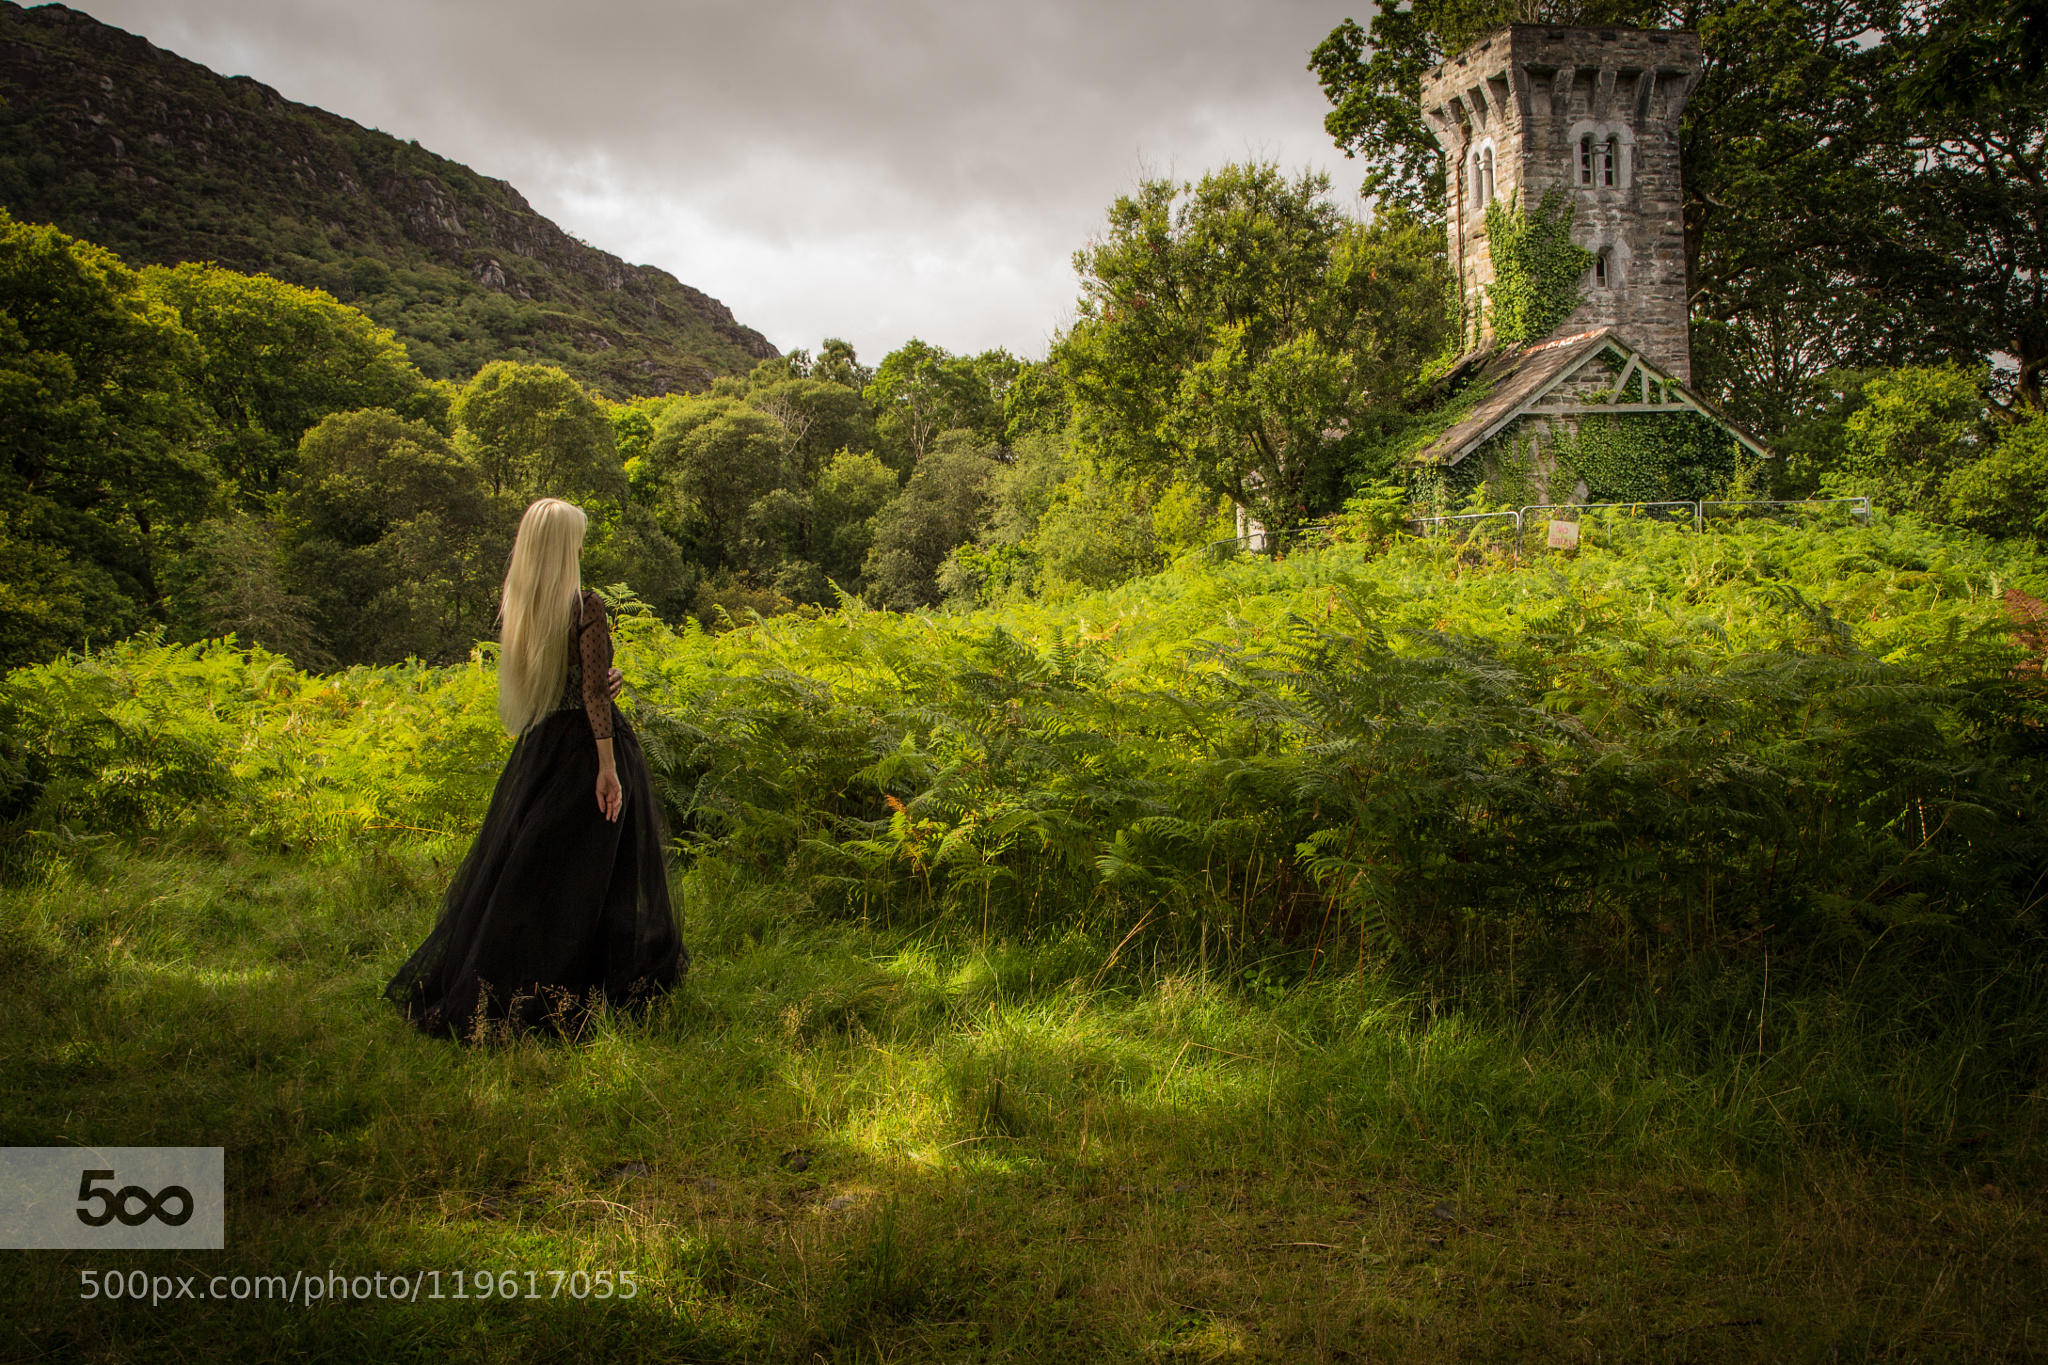 Gaelic Tales: Part I - The Kingdom